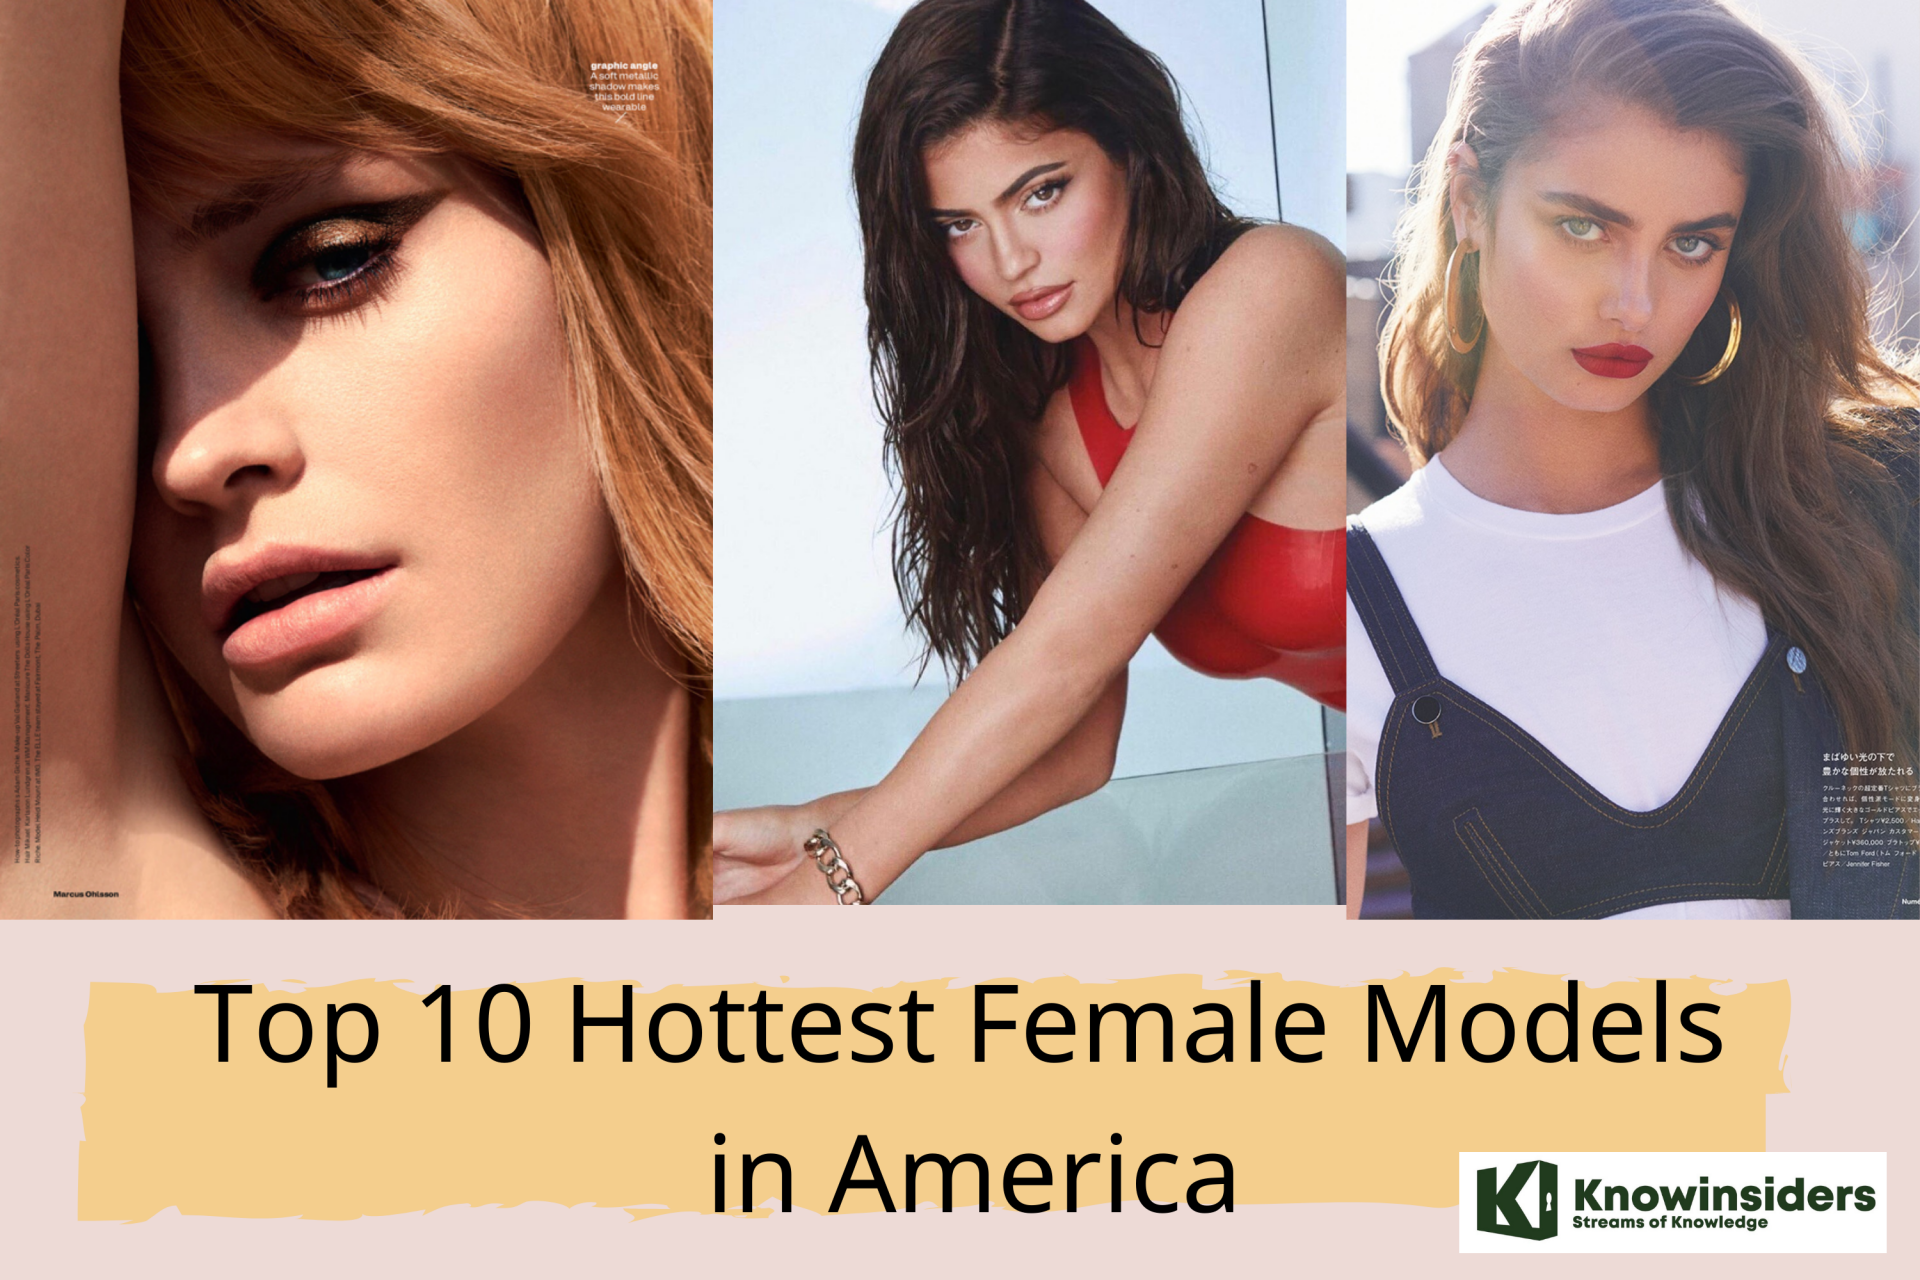 Top 10 Beautiful Female Models in America